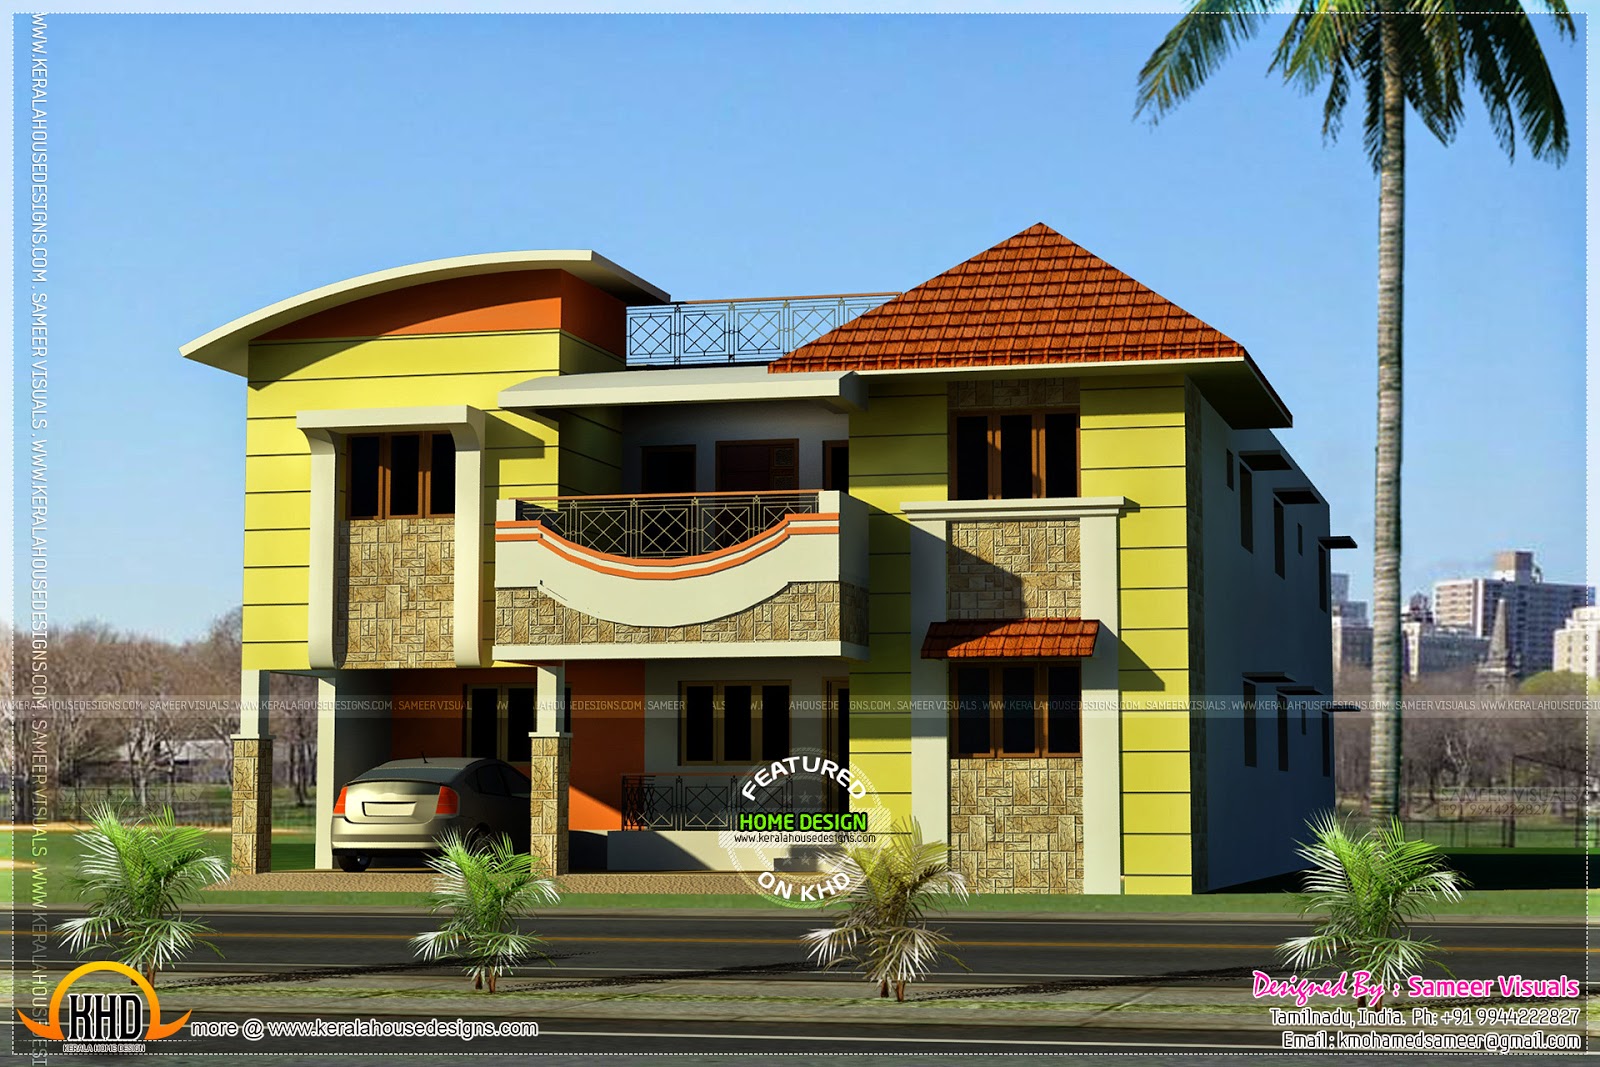 Home Design Tamilnadu HomeRiview